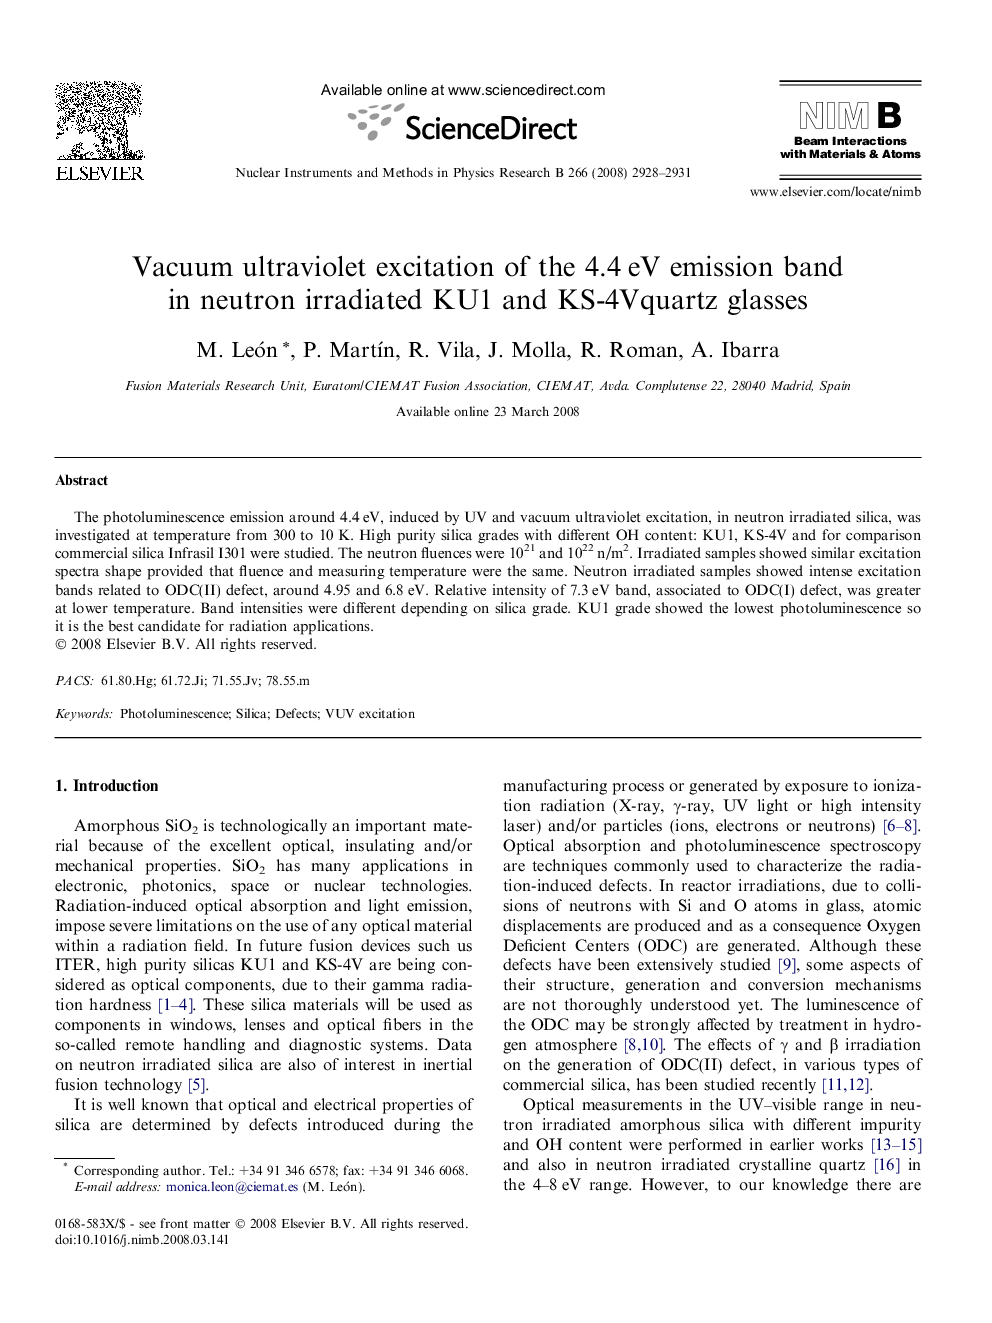 Vacuum ultraviolet excitation of the 4.4 eV emission band in neutron irradiated KU1 and KS-4Vquartz glasses